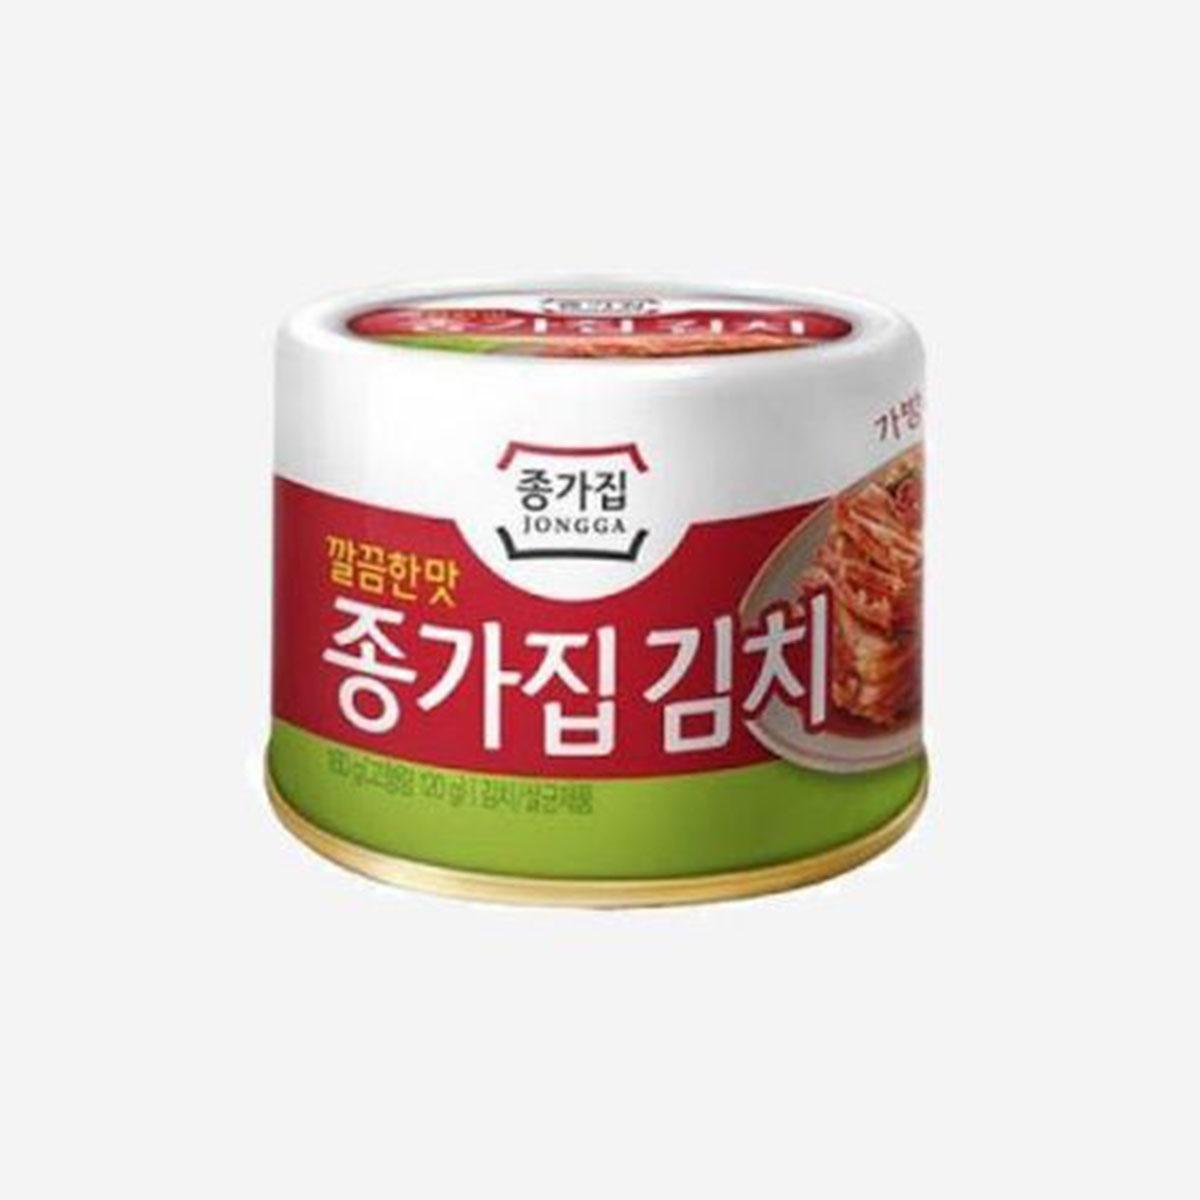 Canned Kimchi (160g)